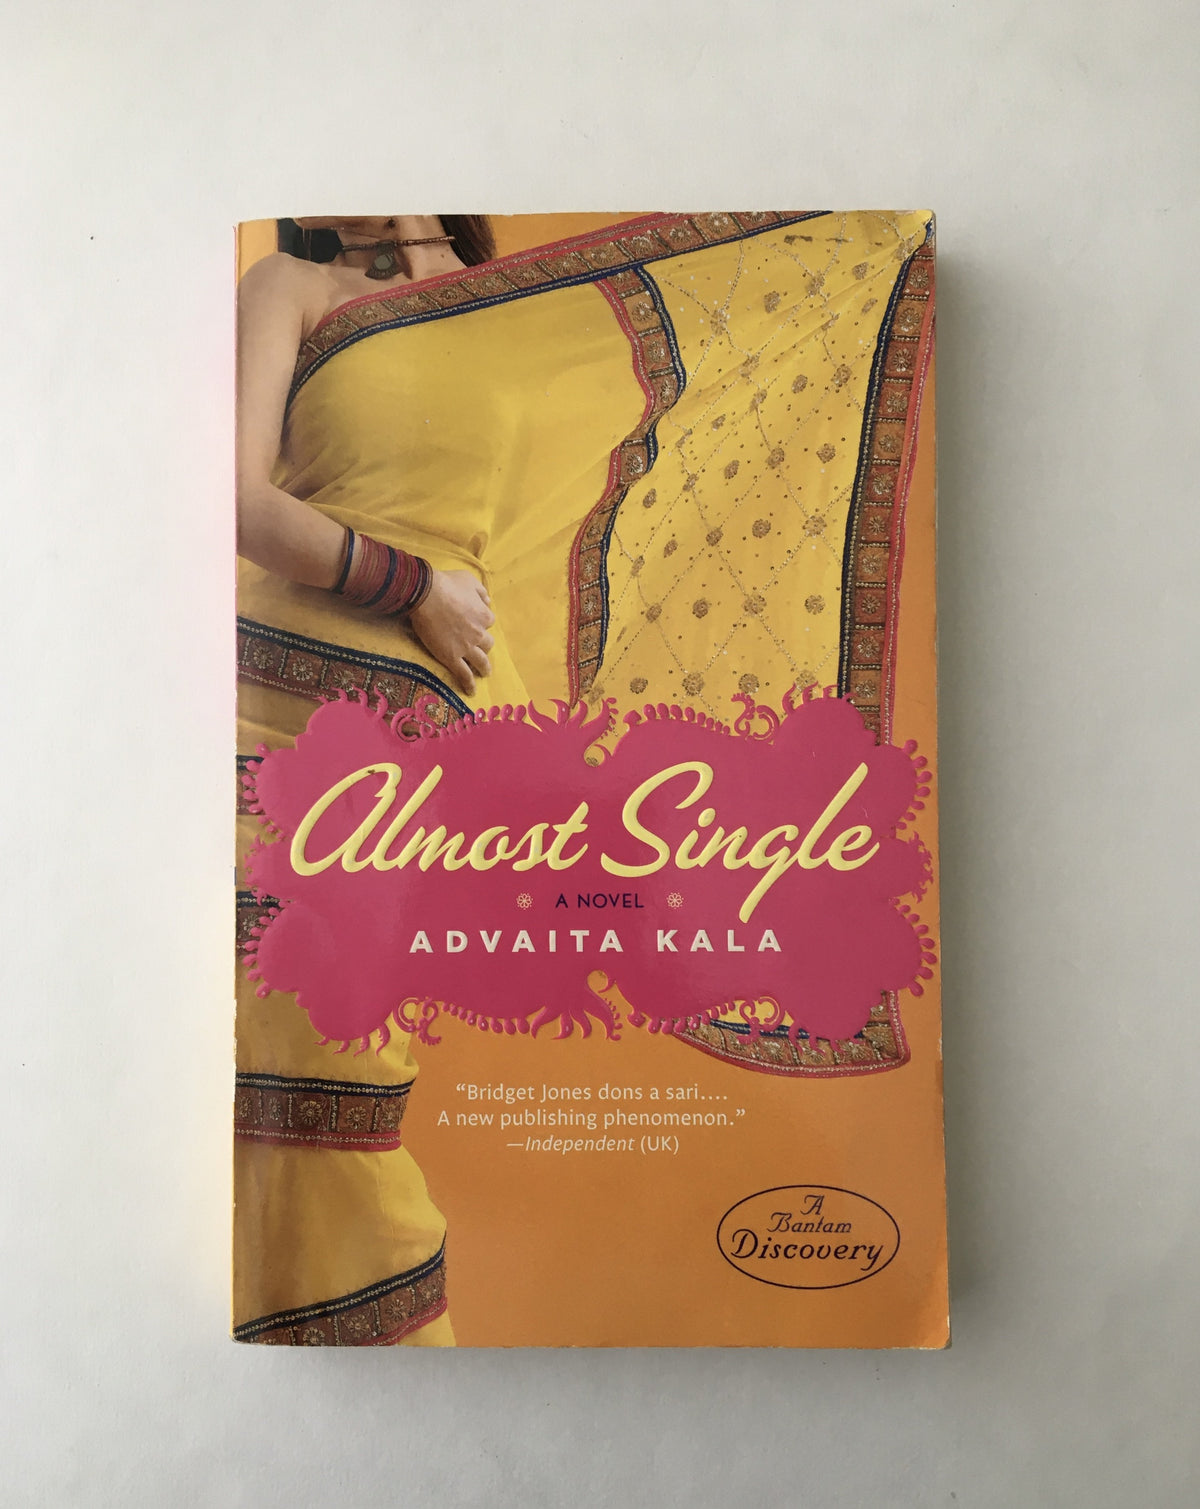 Almost Single by Advaita Kala